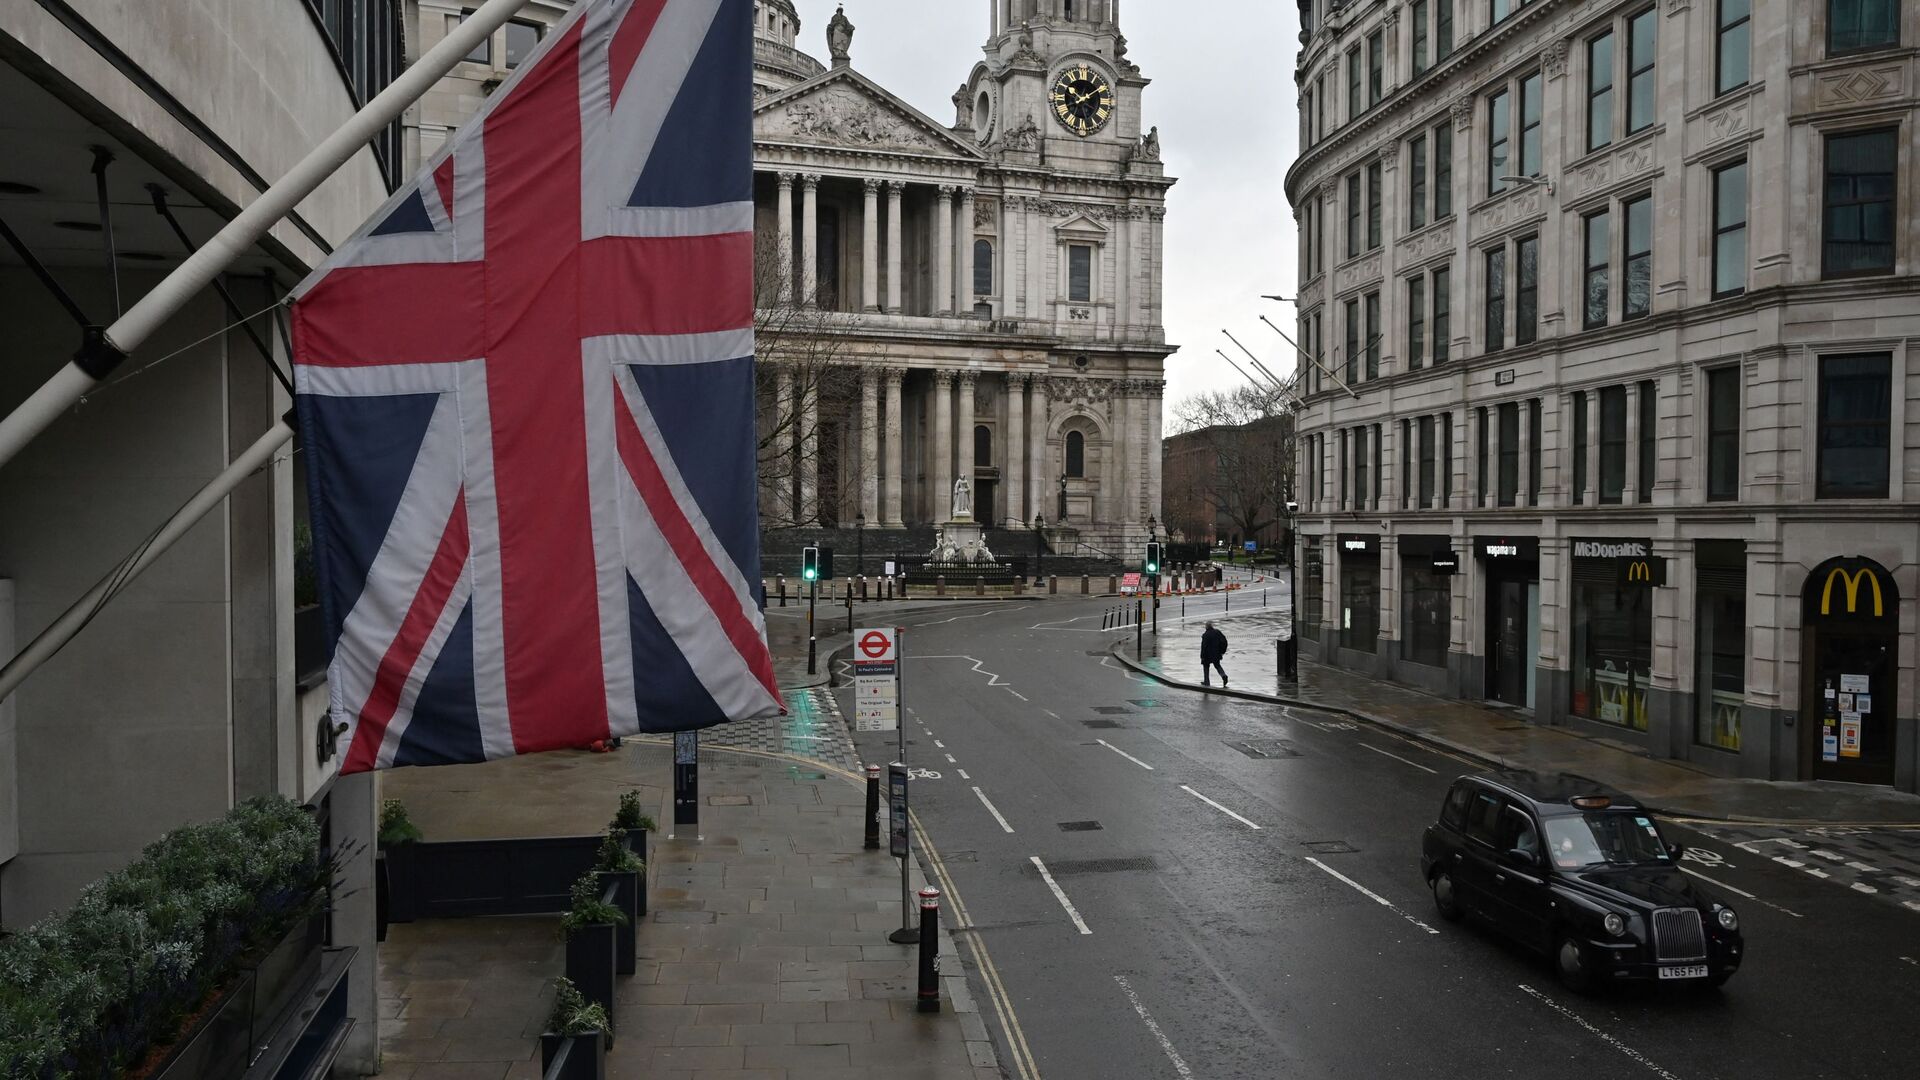 Британский флаг на улицах Лондона - Sputnik Абхазия, 1920, 28.05.2022